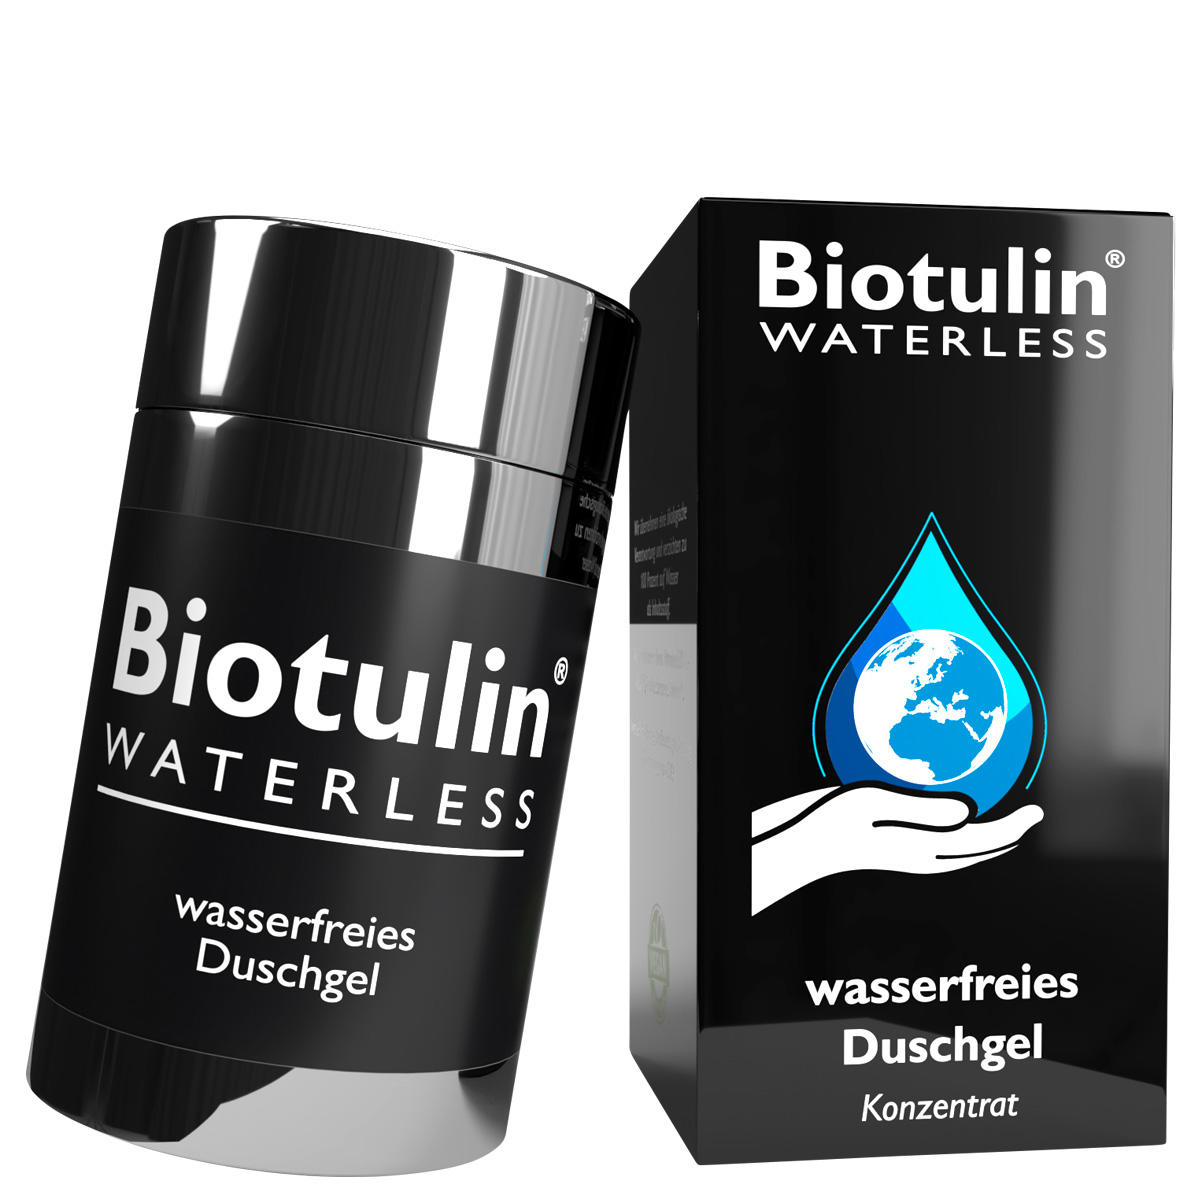 Biotulin WATERLESS watervrije douchegel 70 g - 2